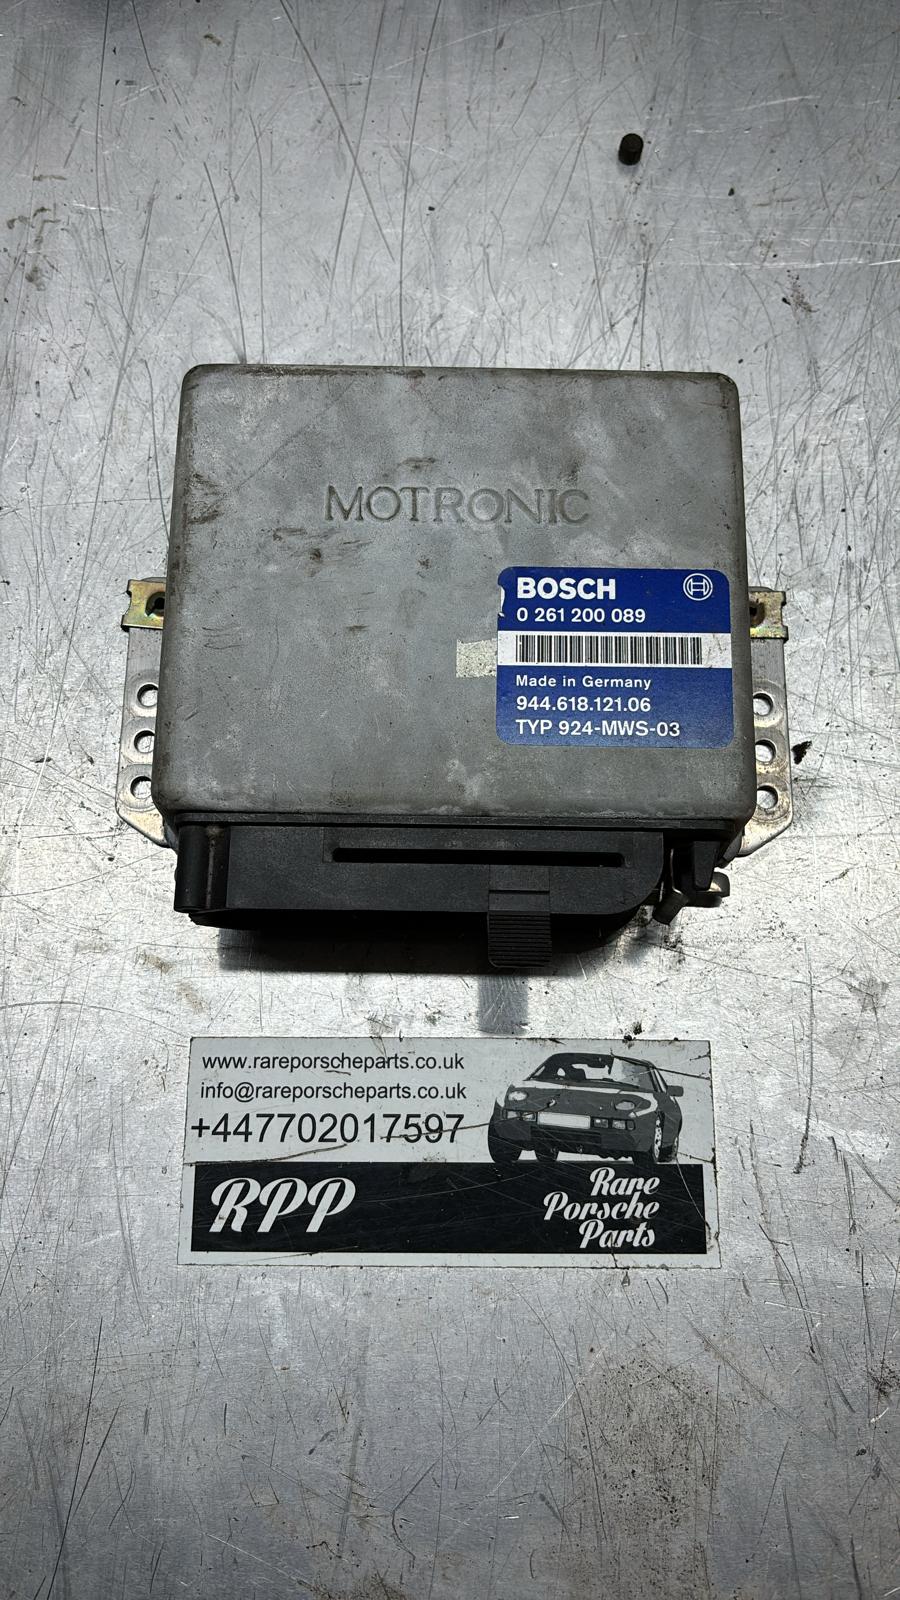 Porsche 944 2.7 Engine Control Unit, used 0261200089 / 94461812106